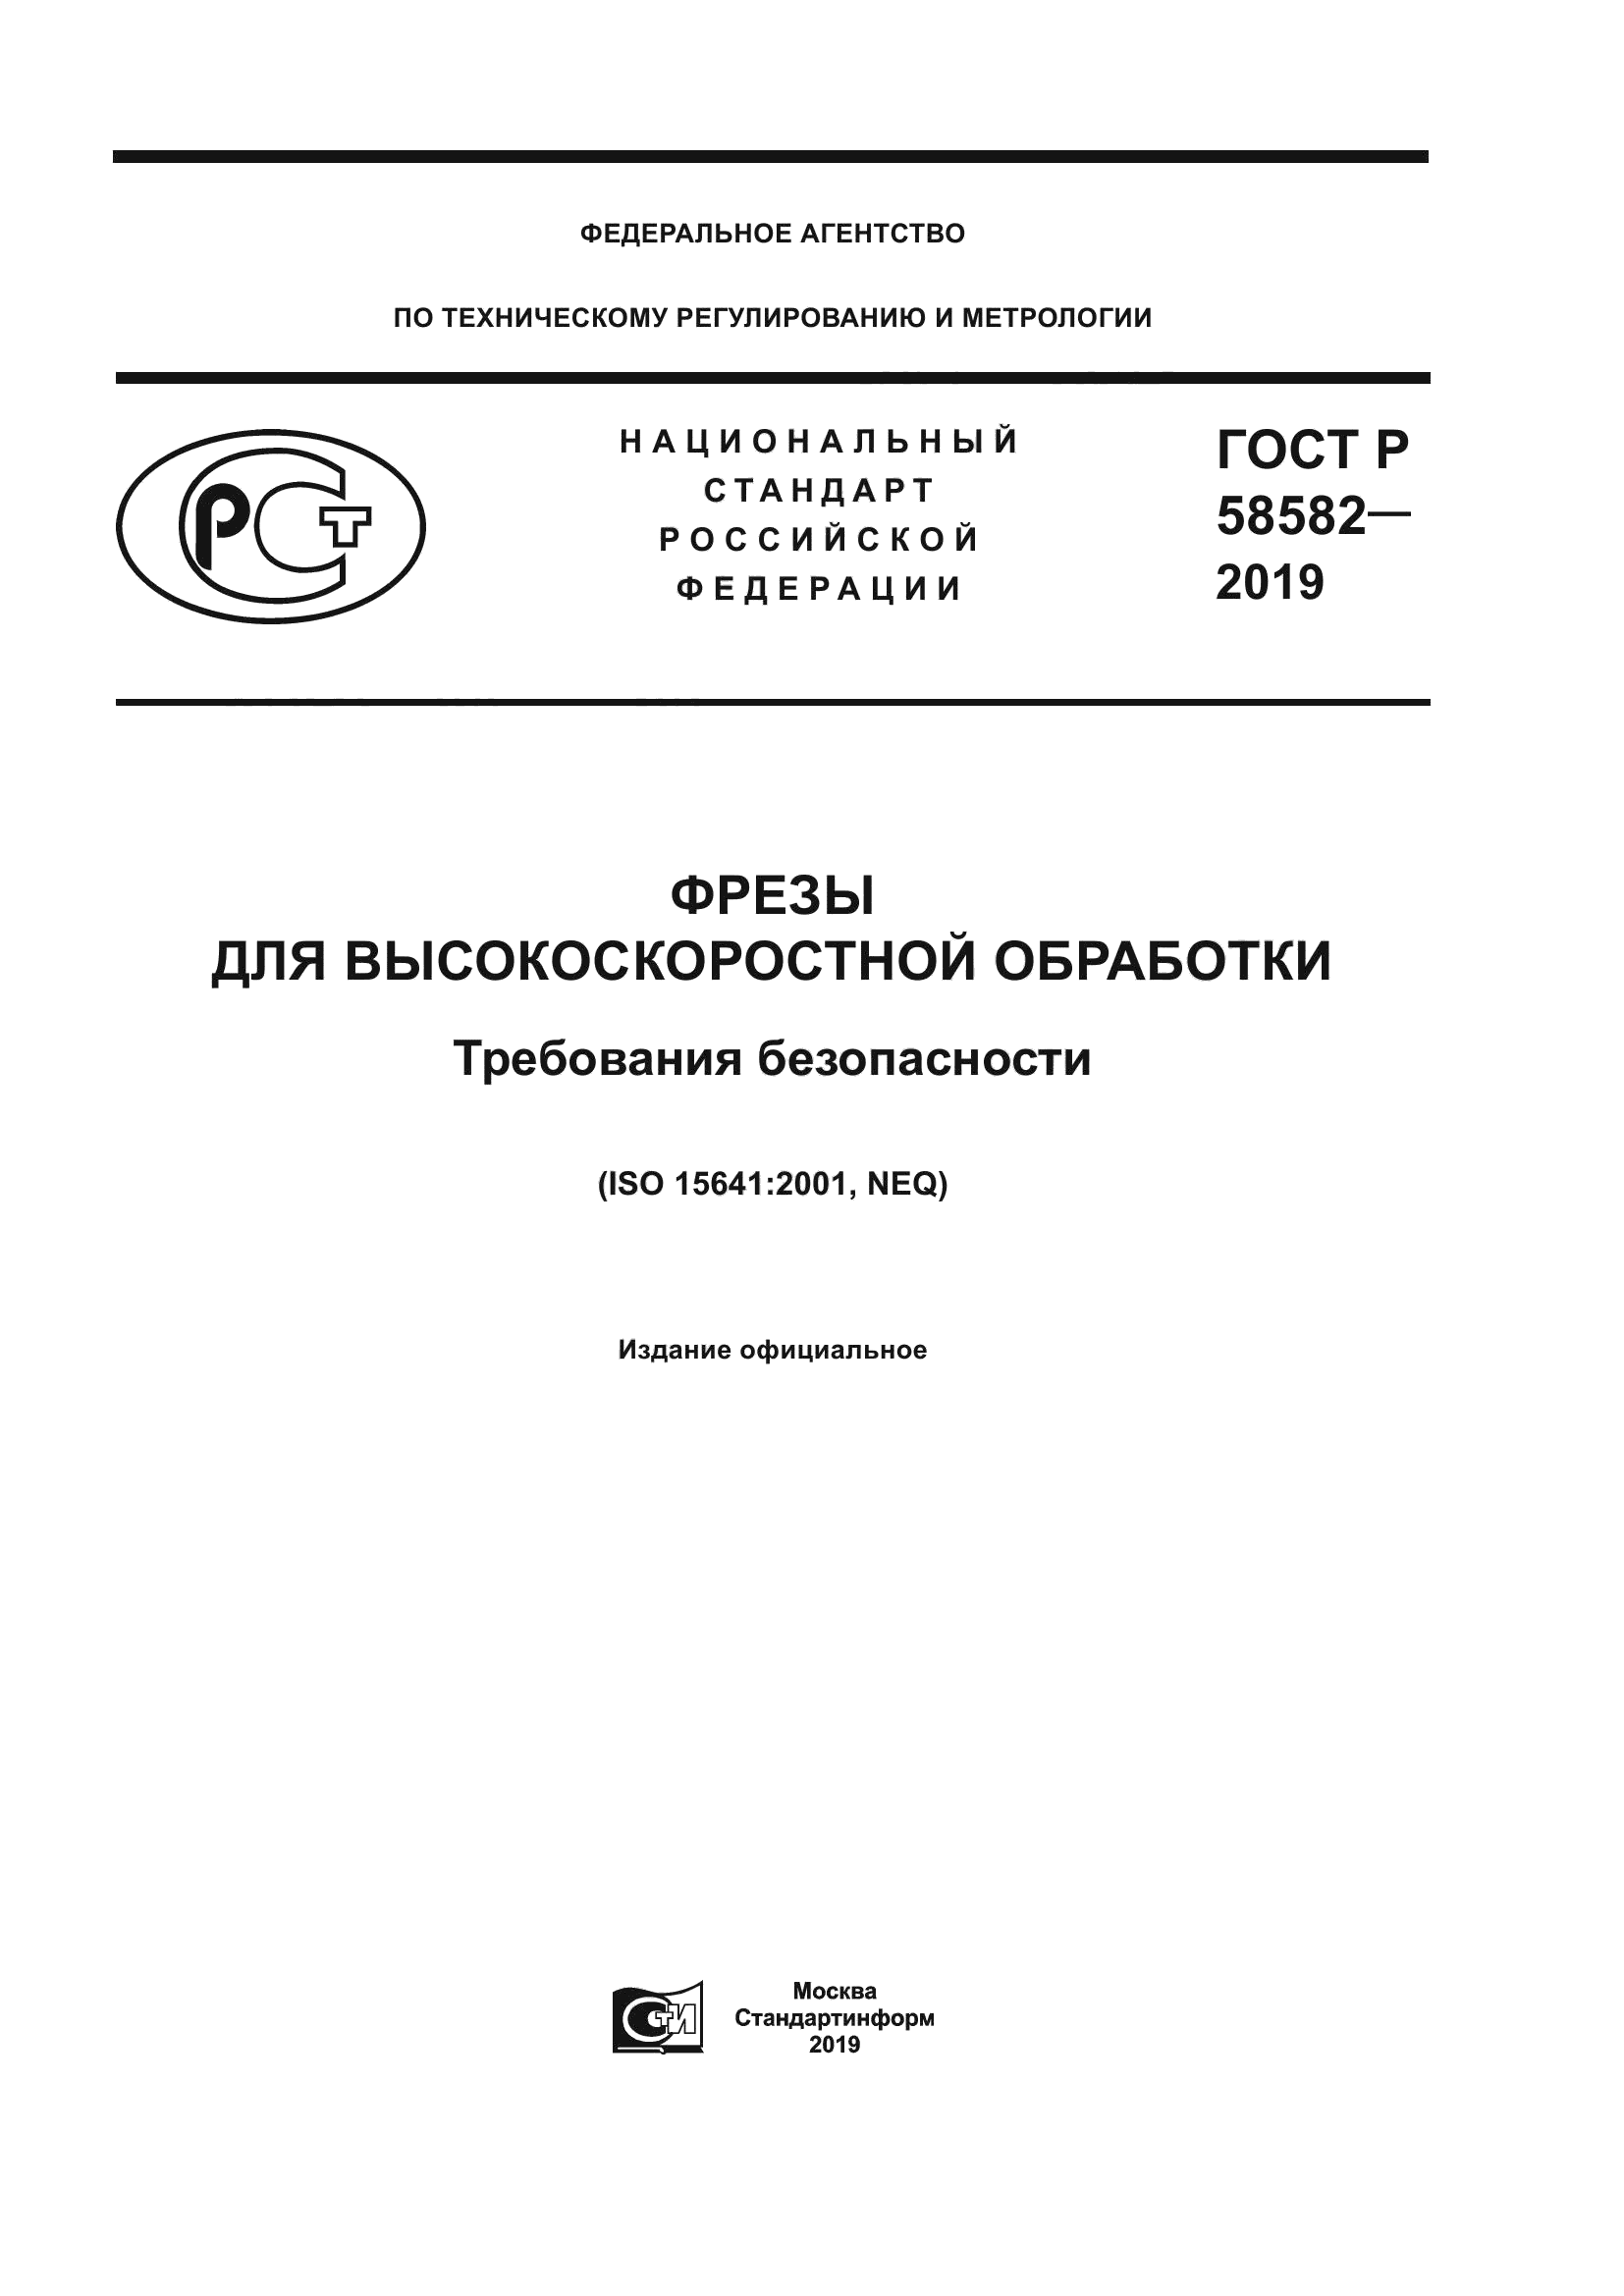 ГОСТ Р 58582-2019